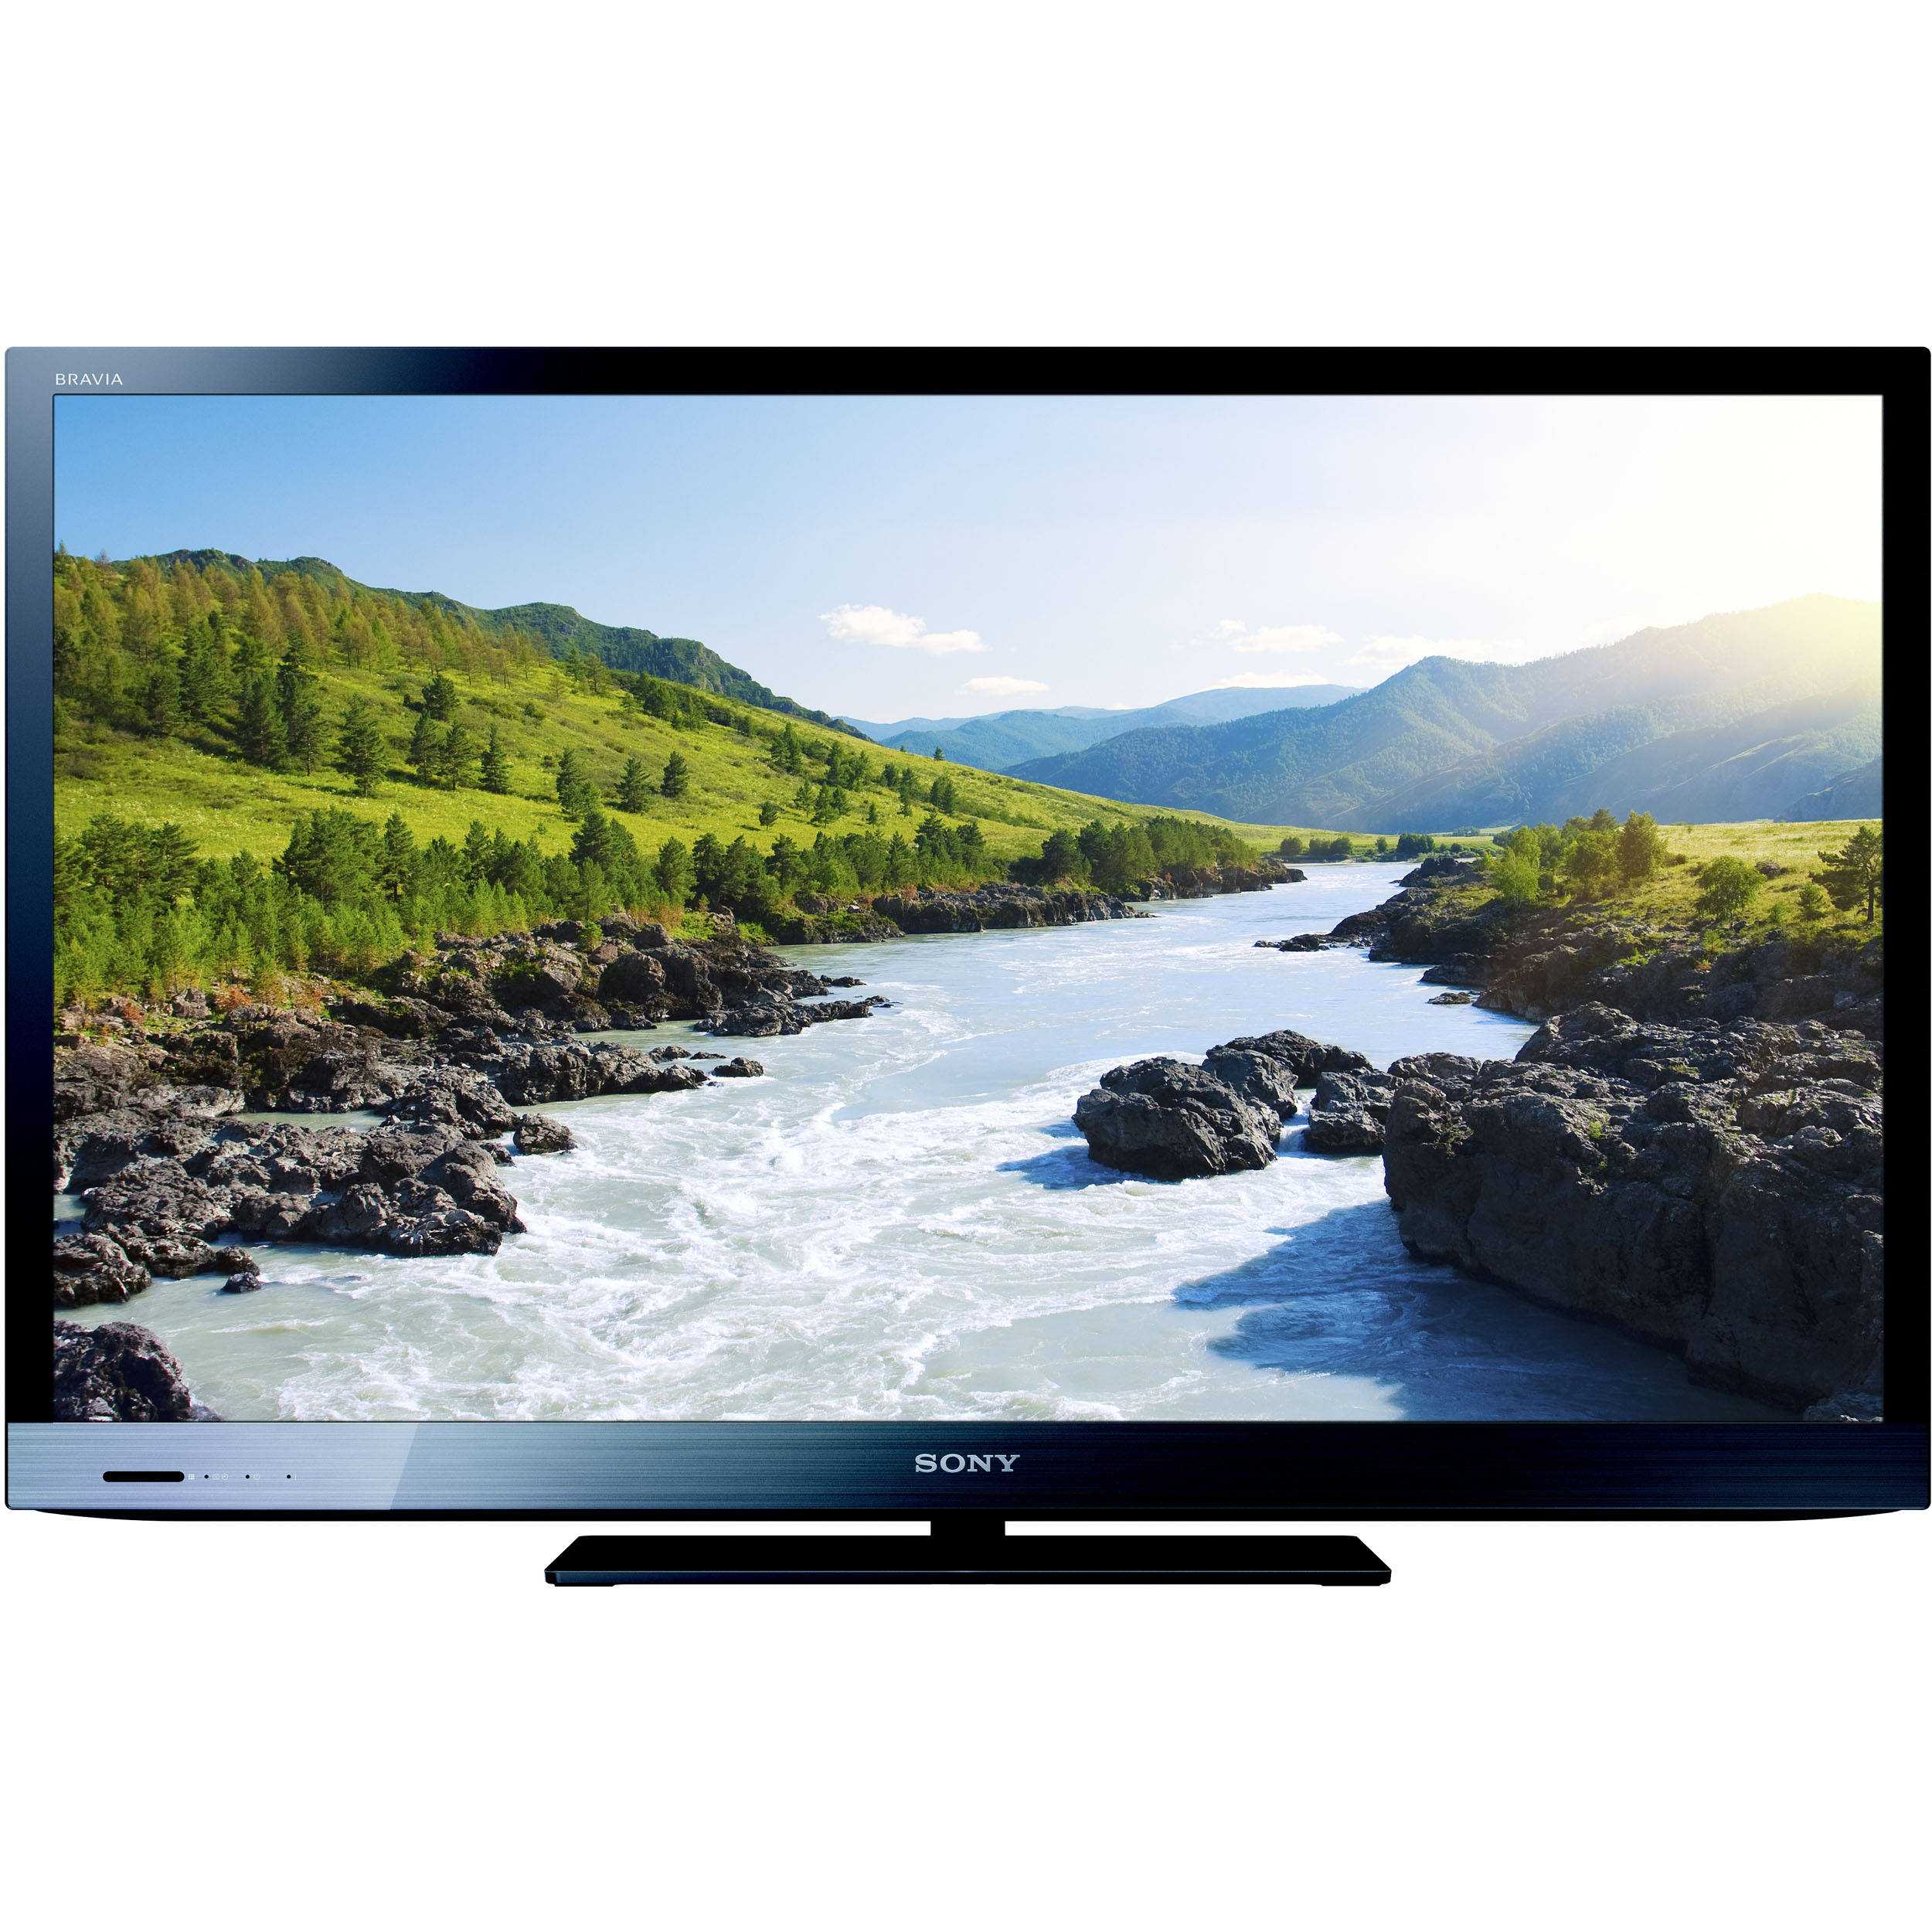 Sony kdl-40r455b - купить , скидки, цена, отзывы, обзор, характеристики - телевизоры